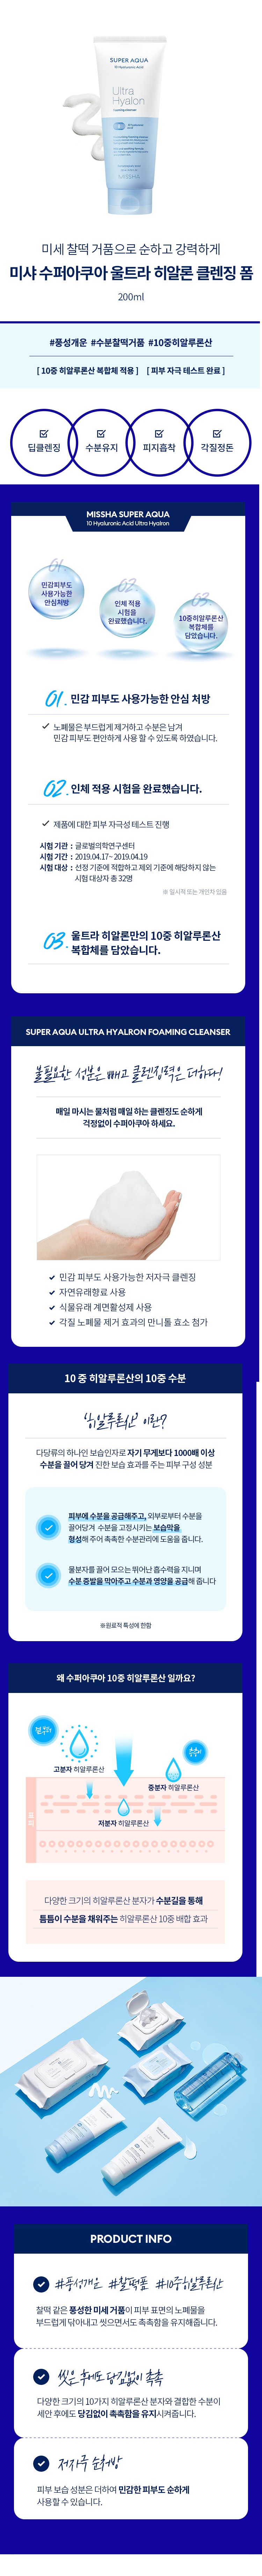 Missha Super Aqua Ultra Hyalon Cleansing Foam korean cleansing product online shop malaysia china macau1